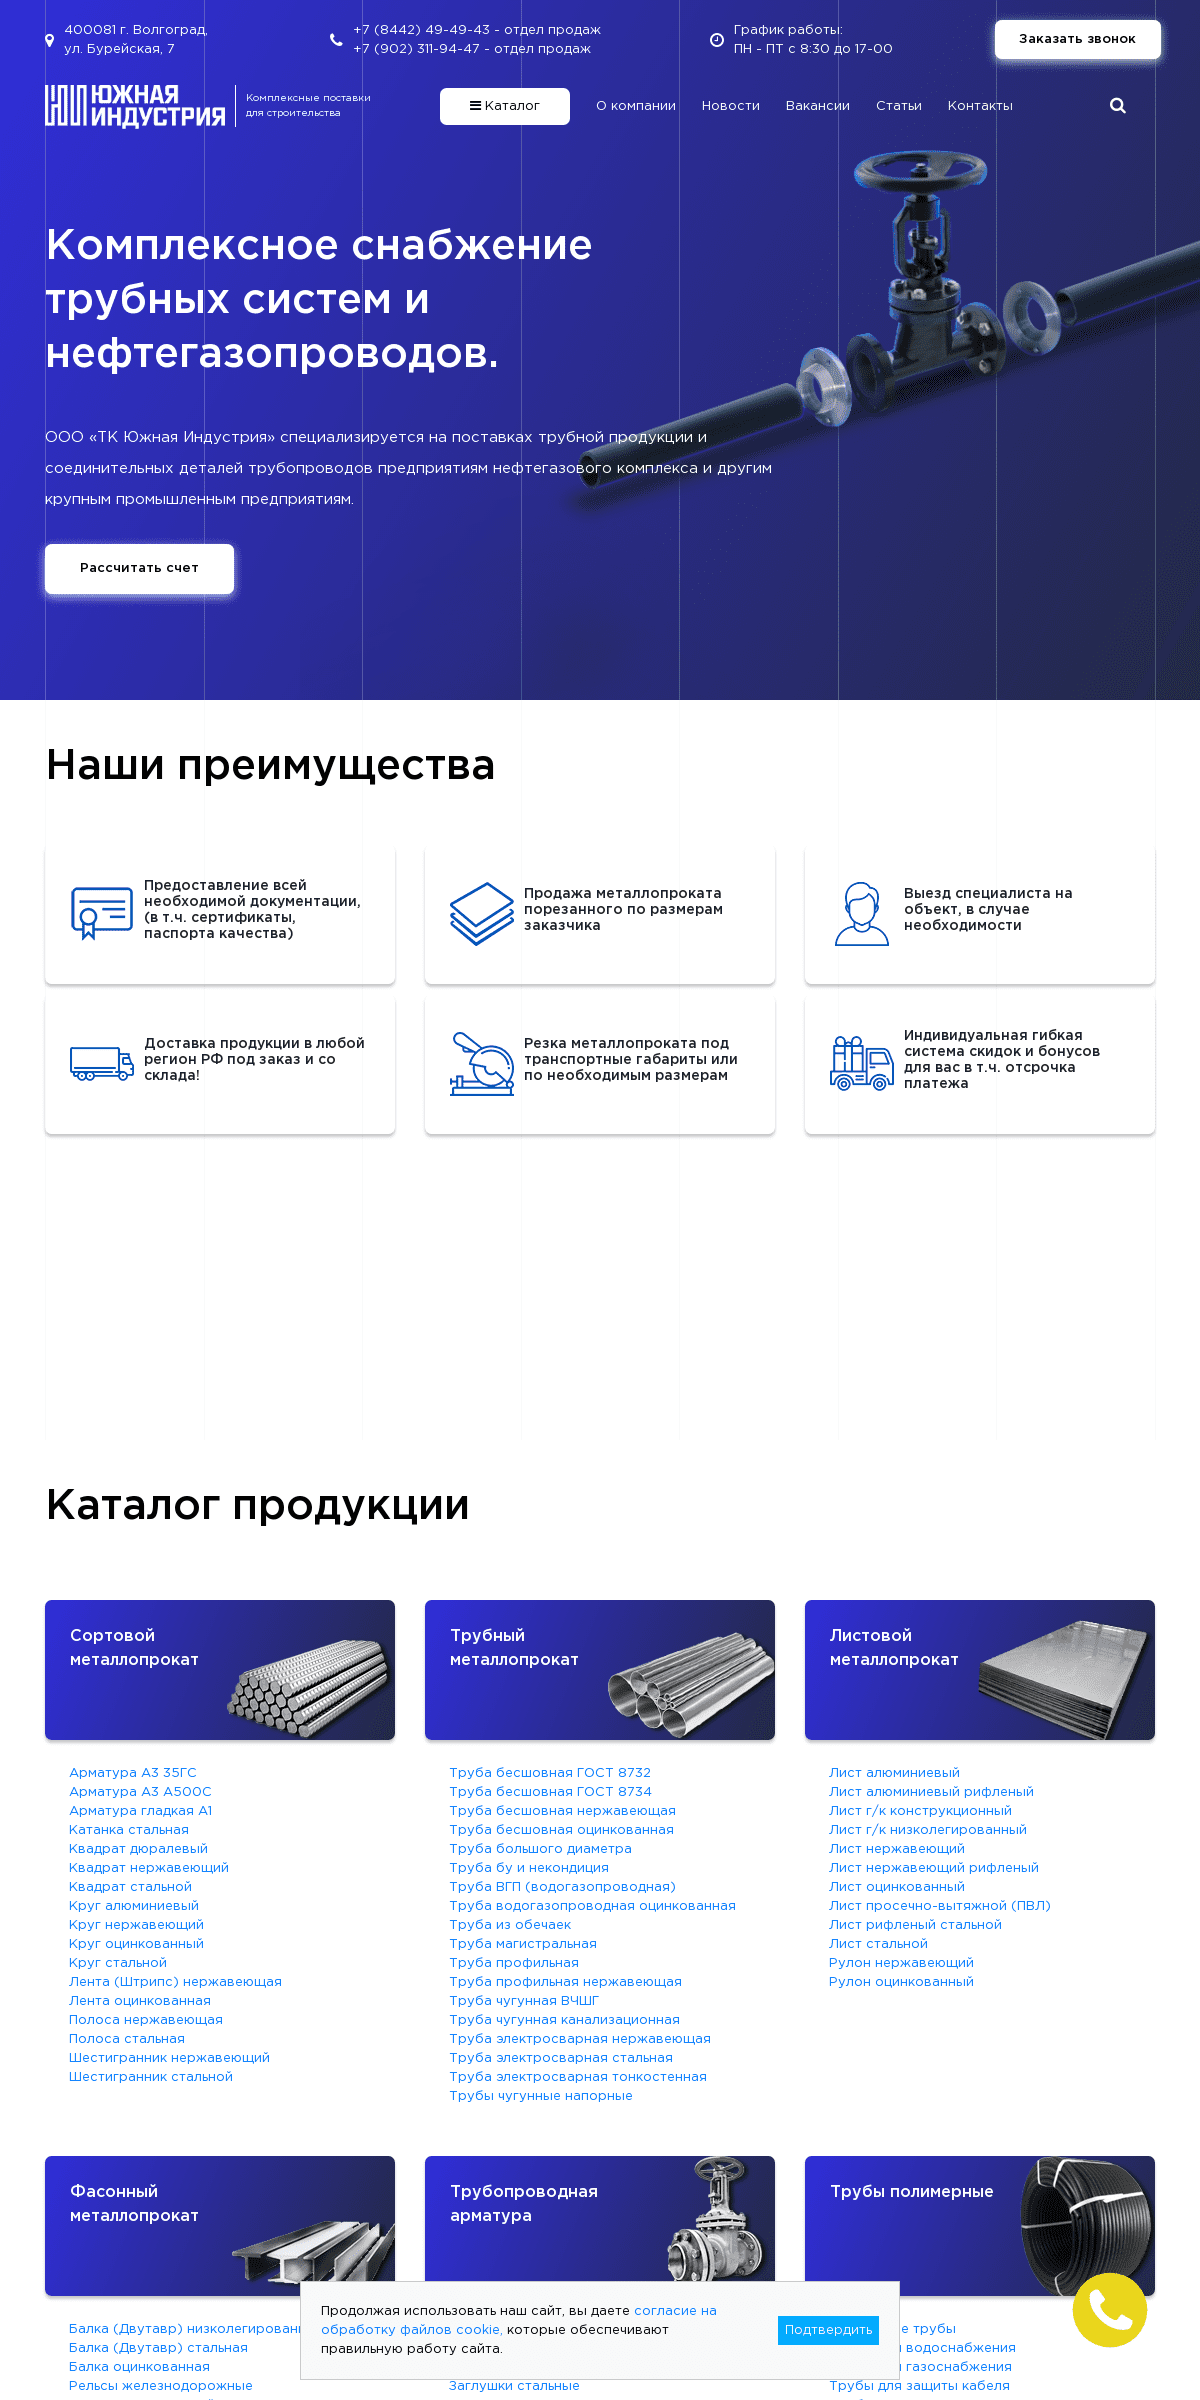 A complete backup of u-industry.ru